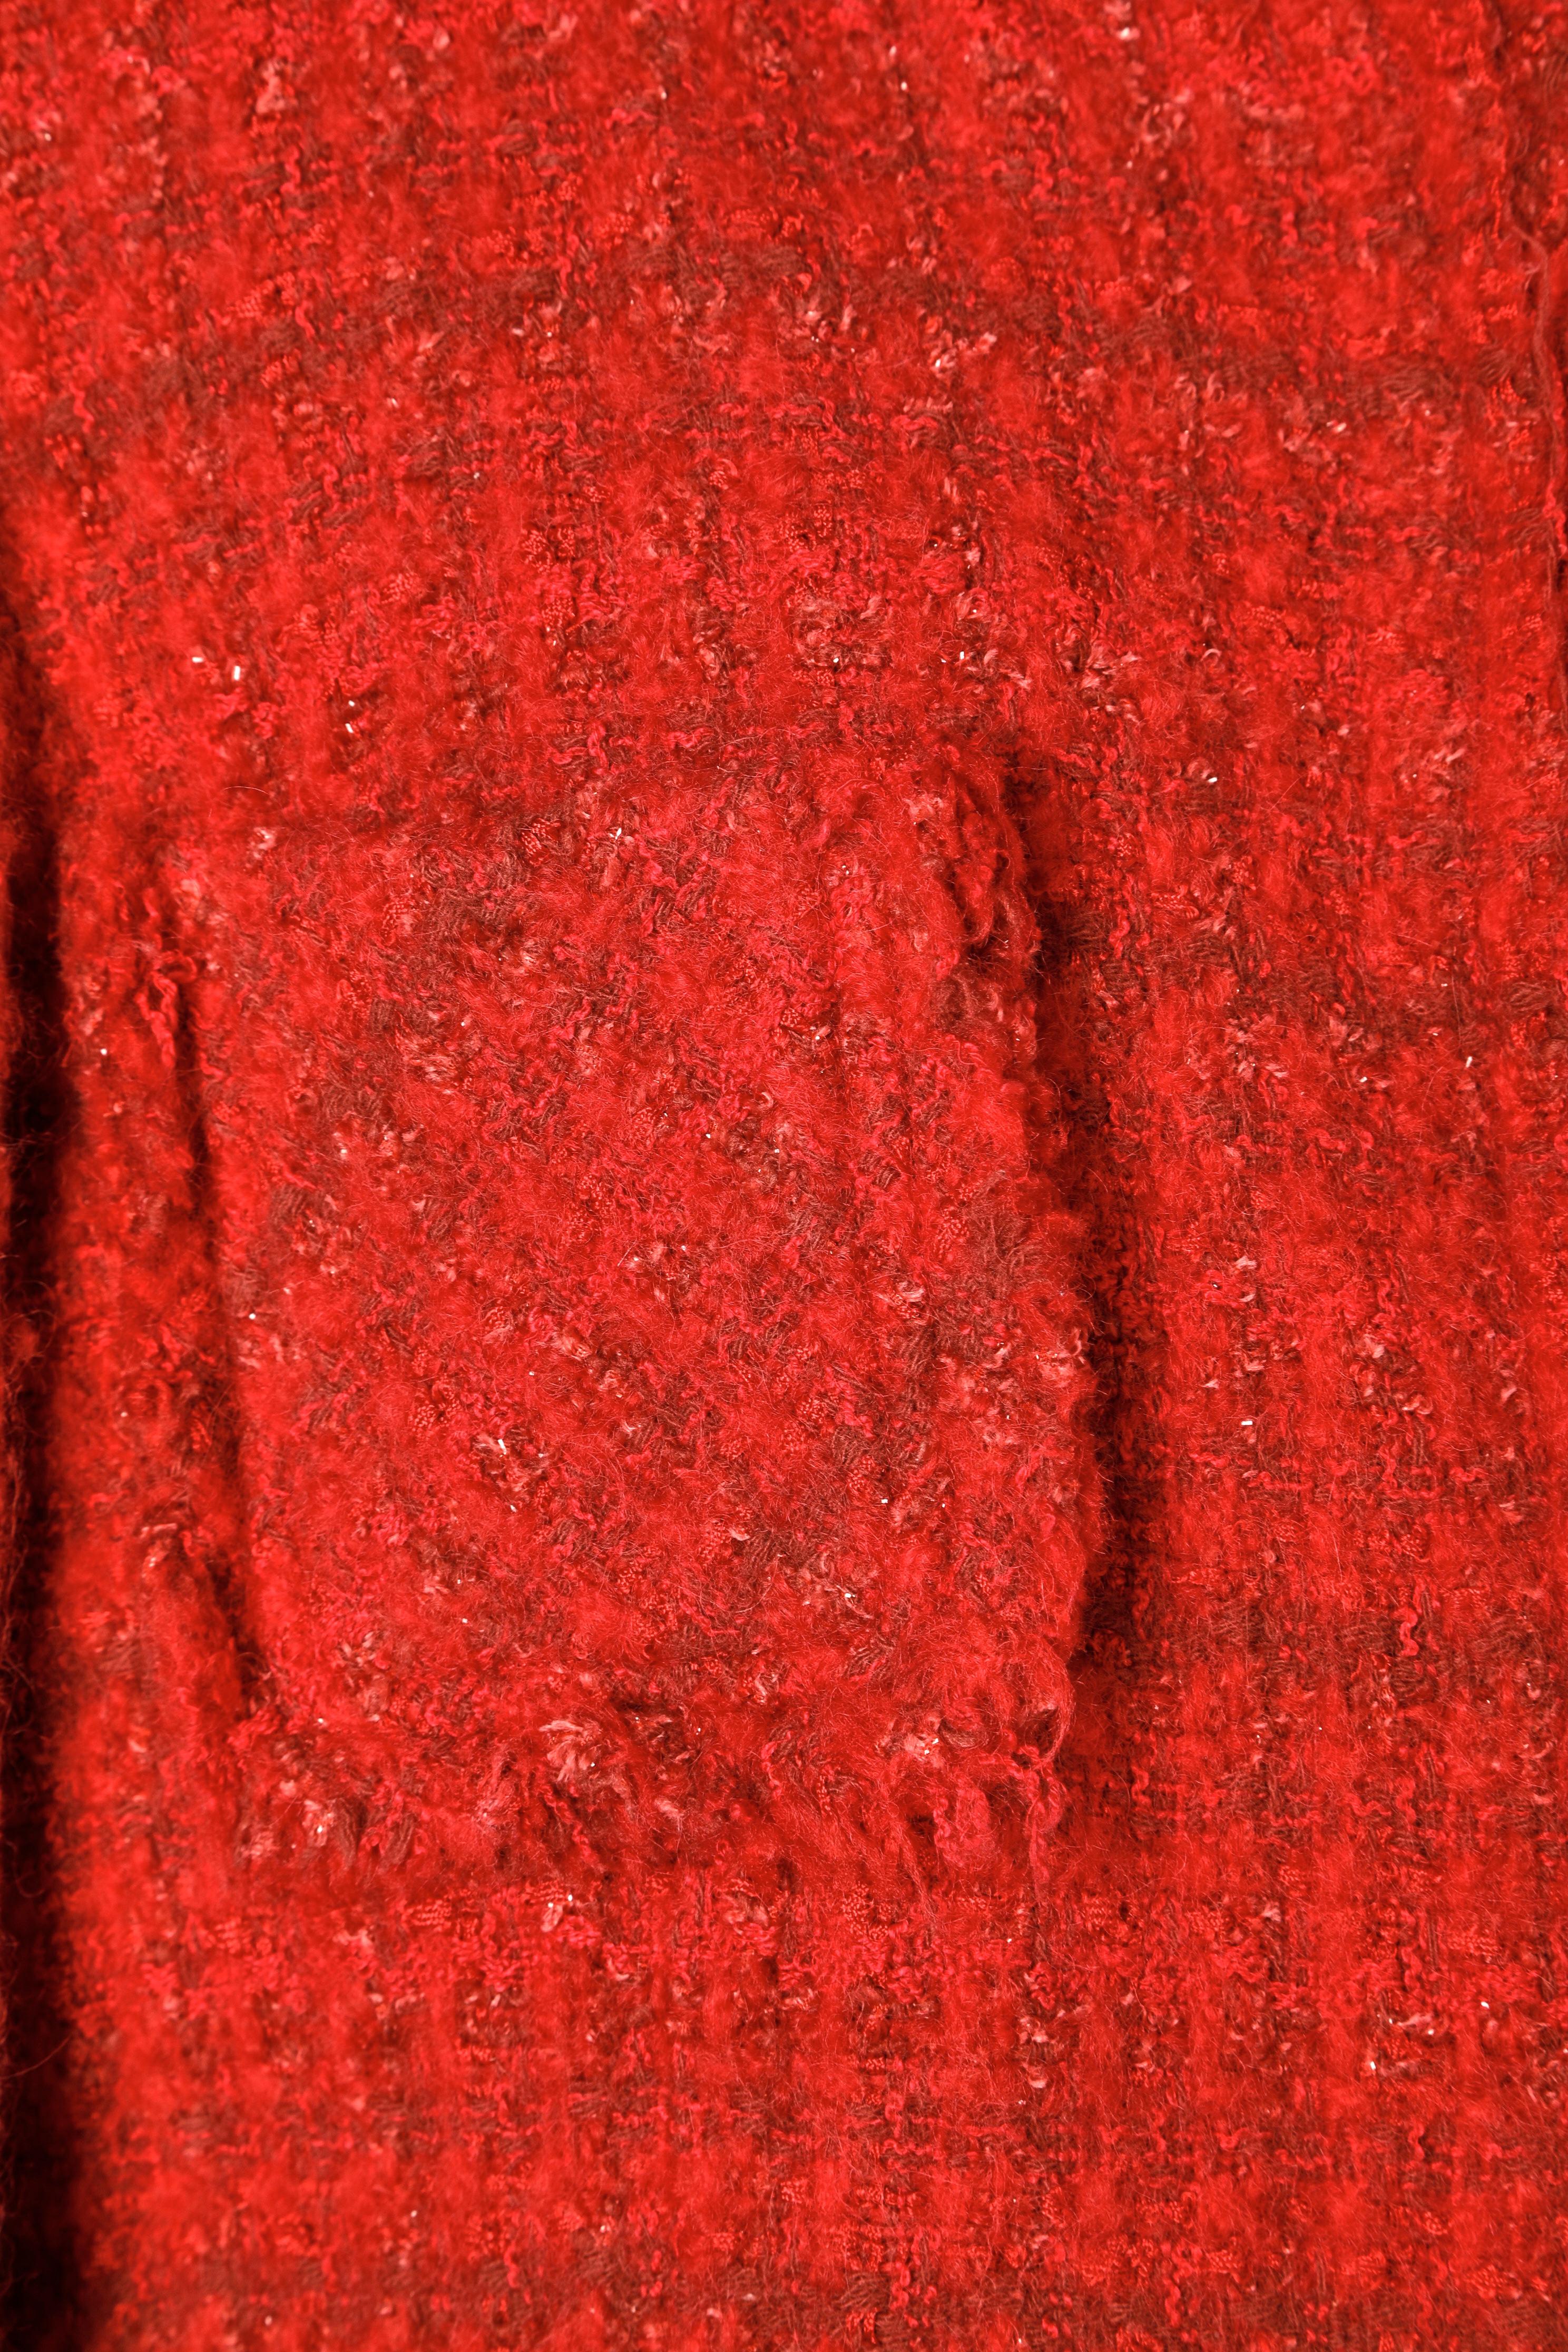 Red wool jacket 